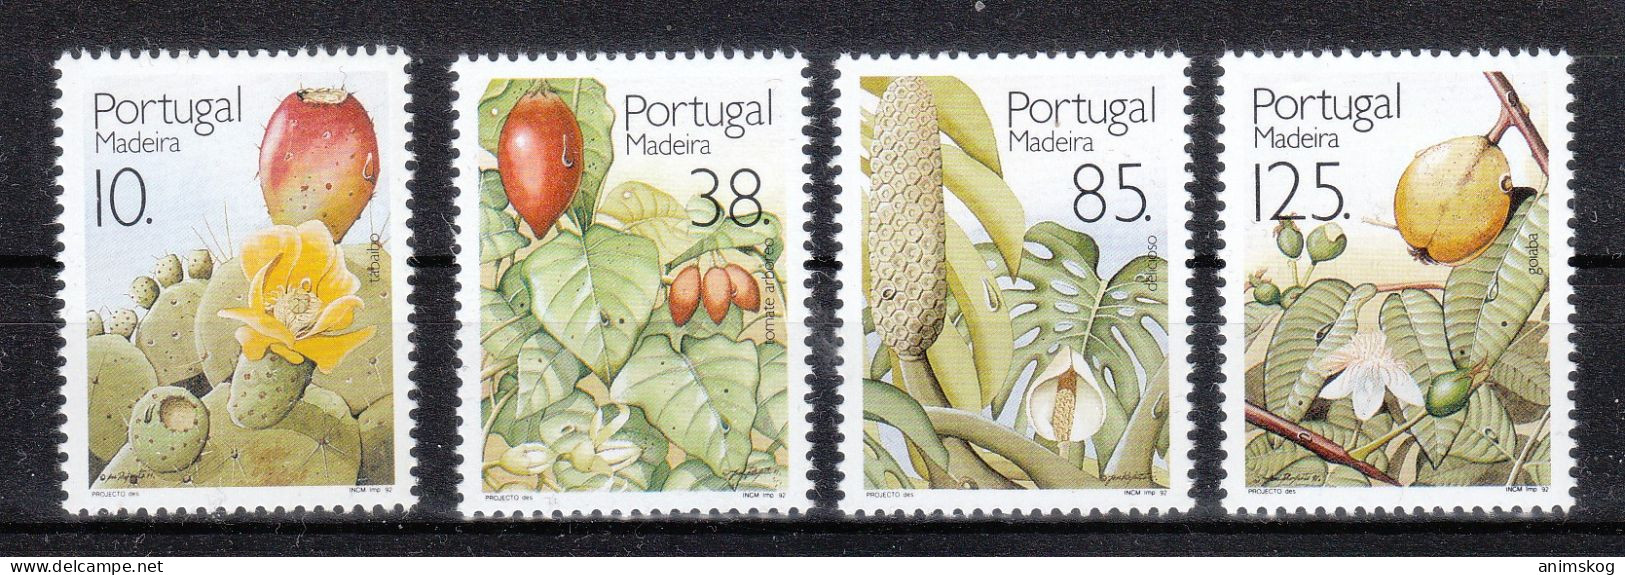 Portugal-Madeira 1992**, Subtrop. Früchte+Pflanzen, Kaktus Opuntia / Portugal-Madeira 1992, MNH, Subtr. Fruits+Plants - Cactusses